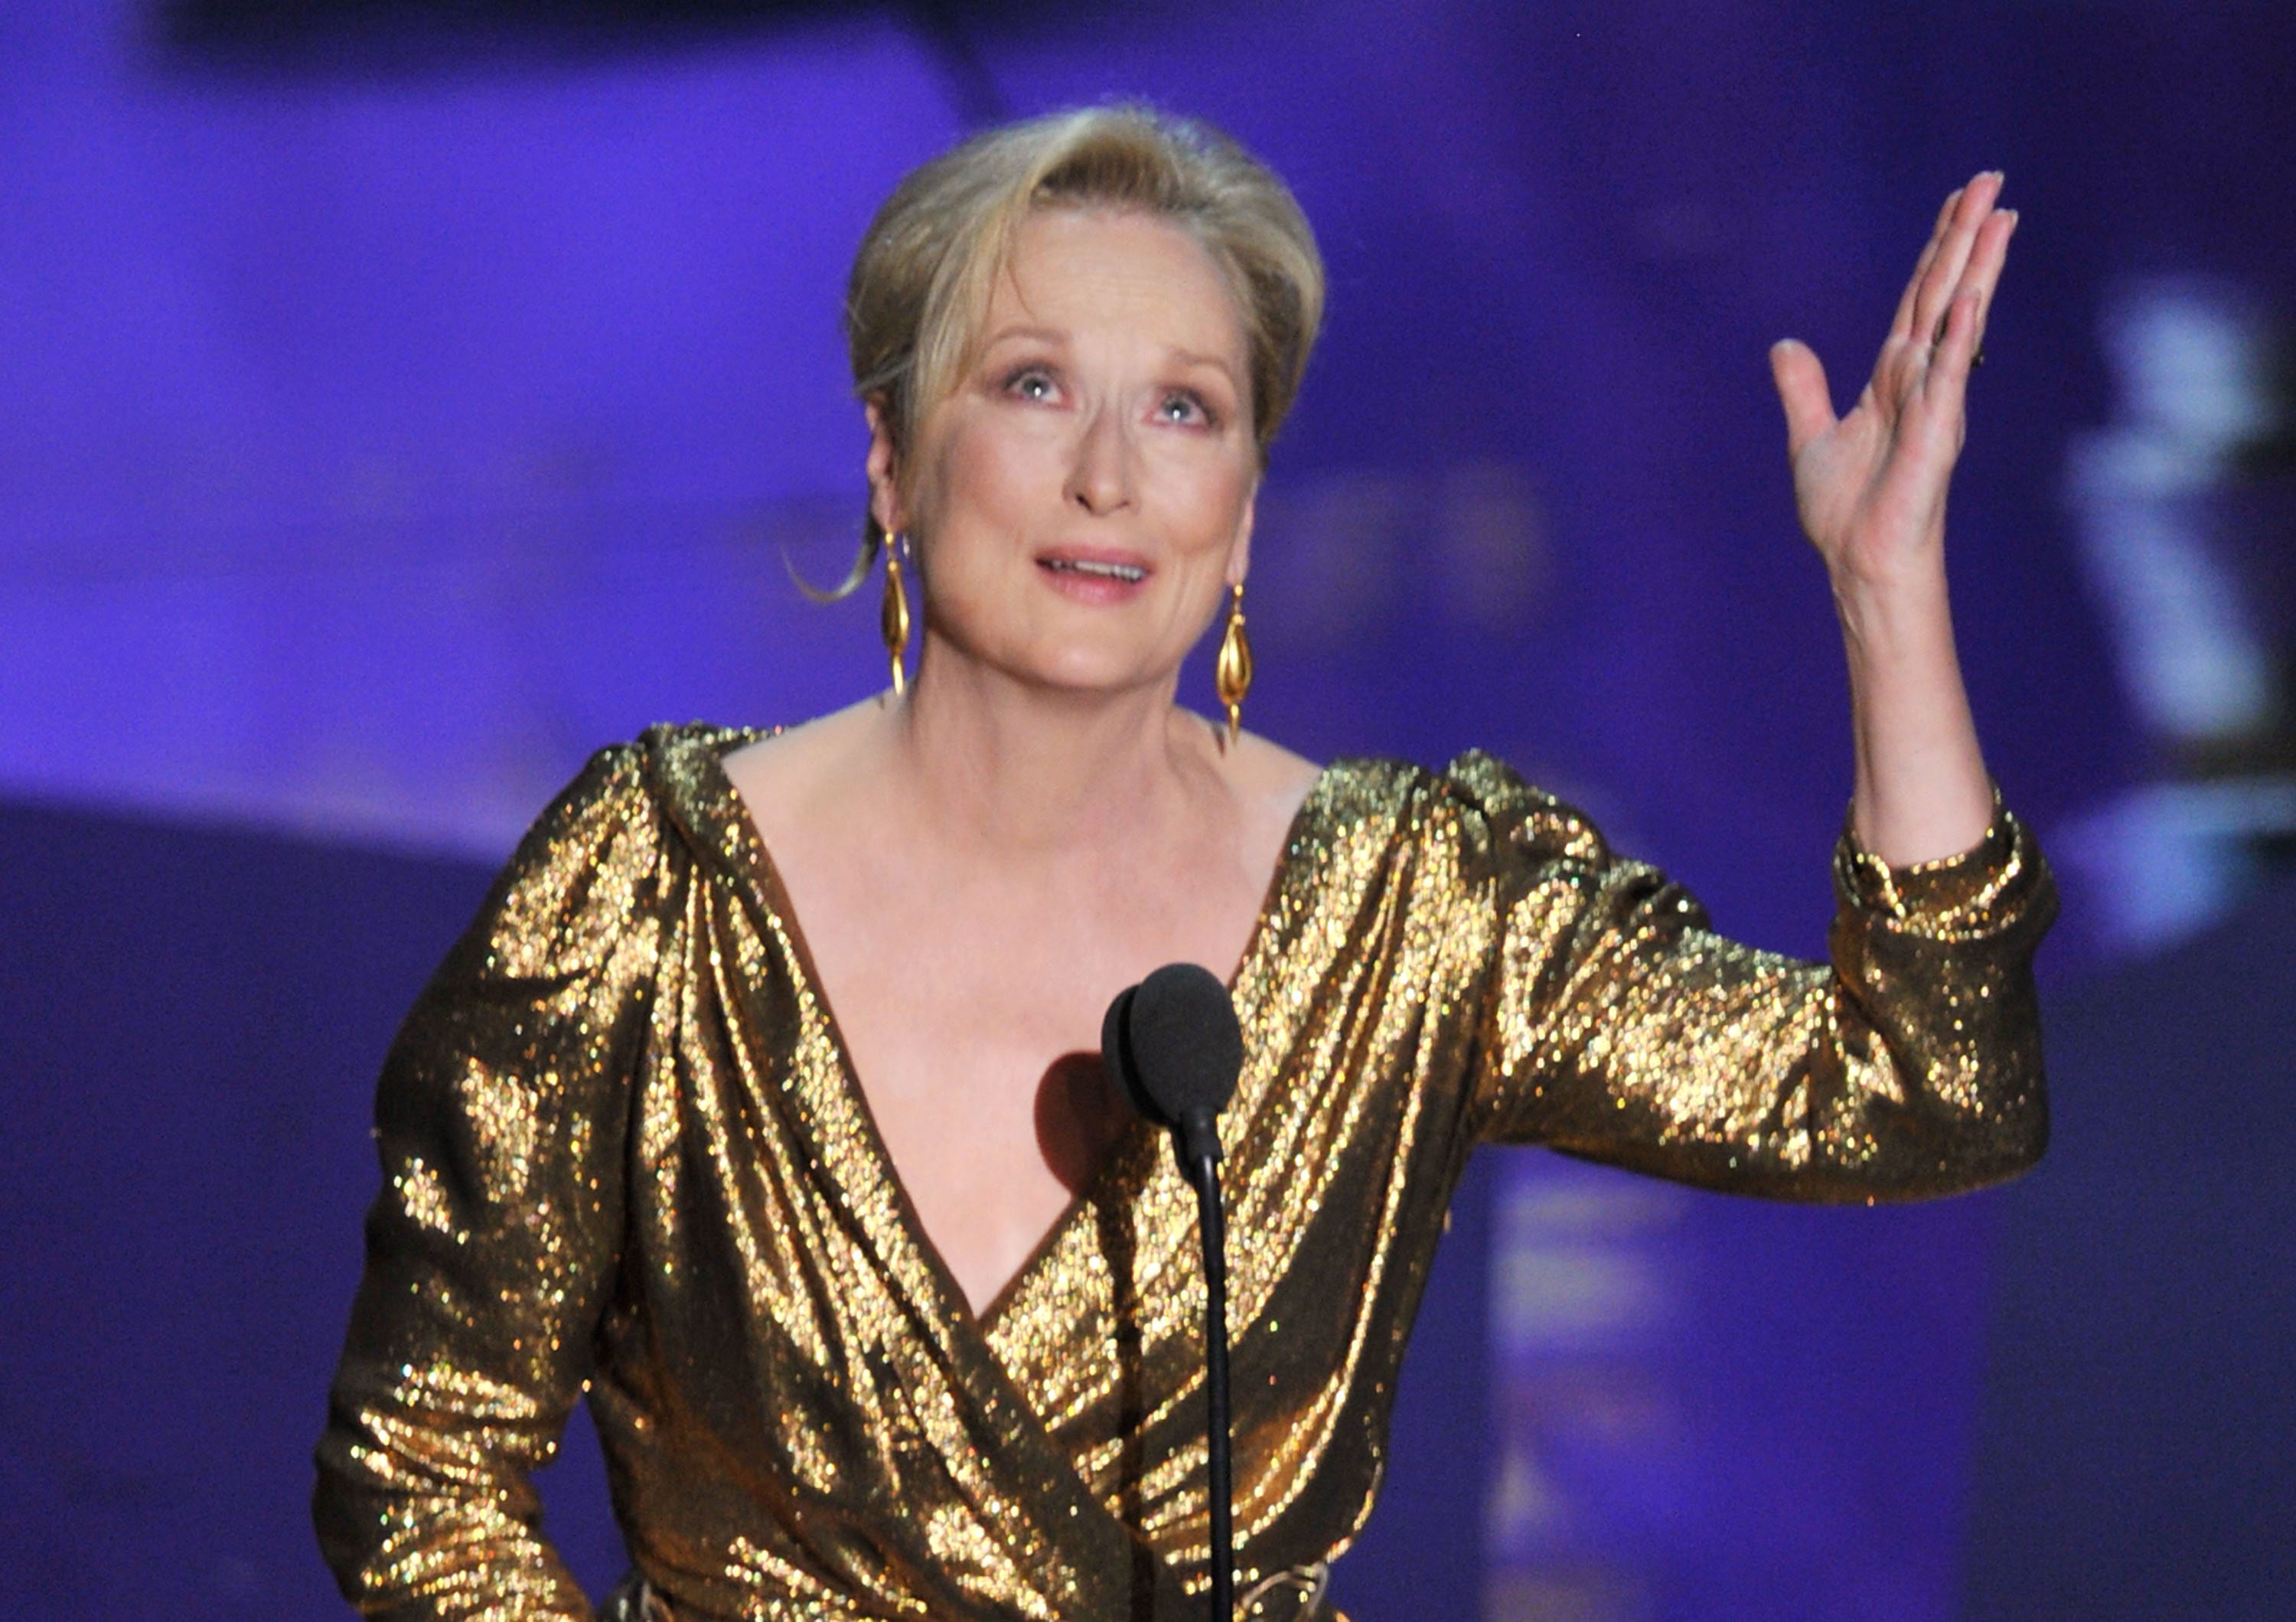 Meryl Streep wearing a gold dress